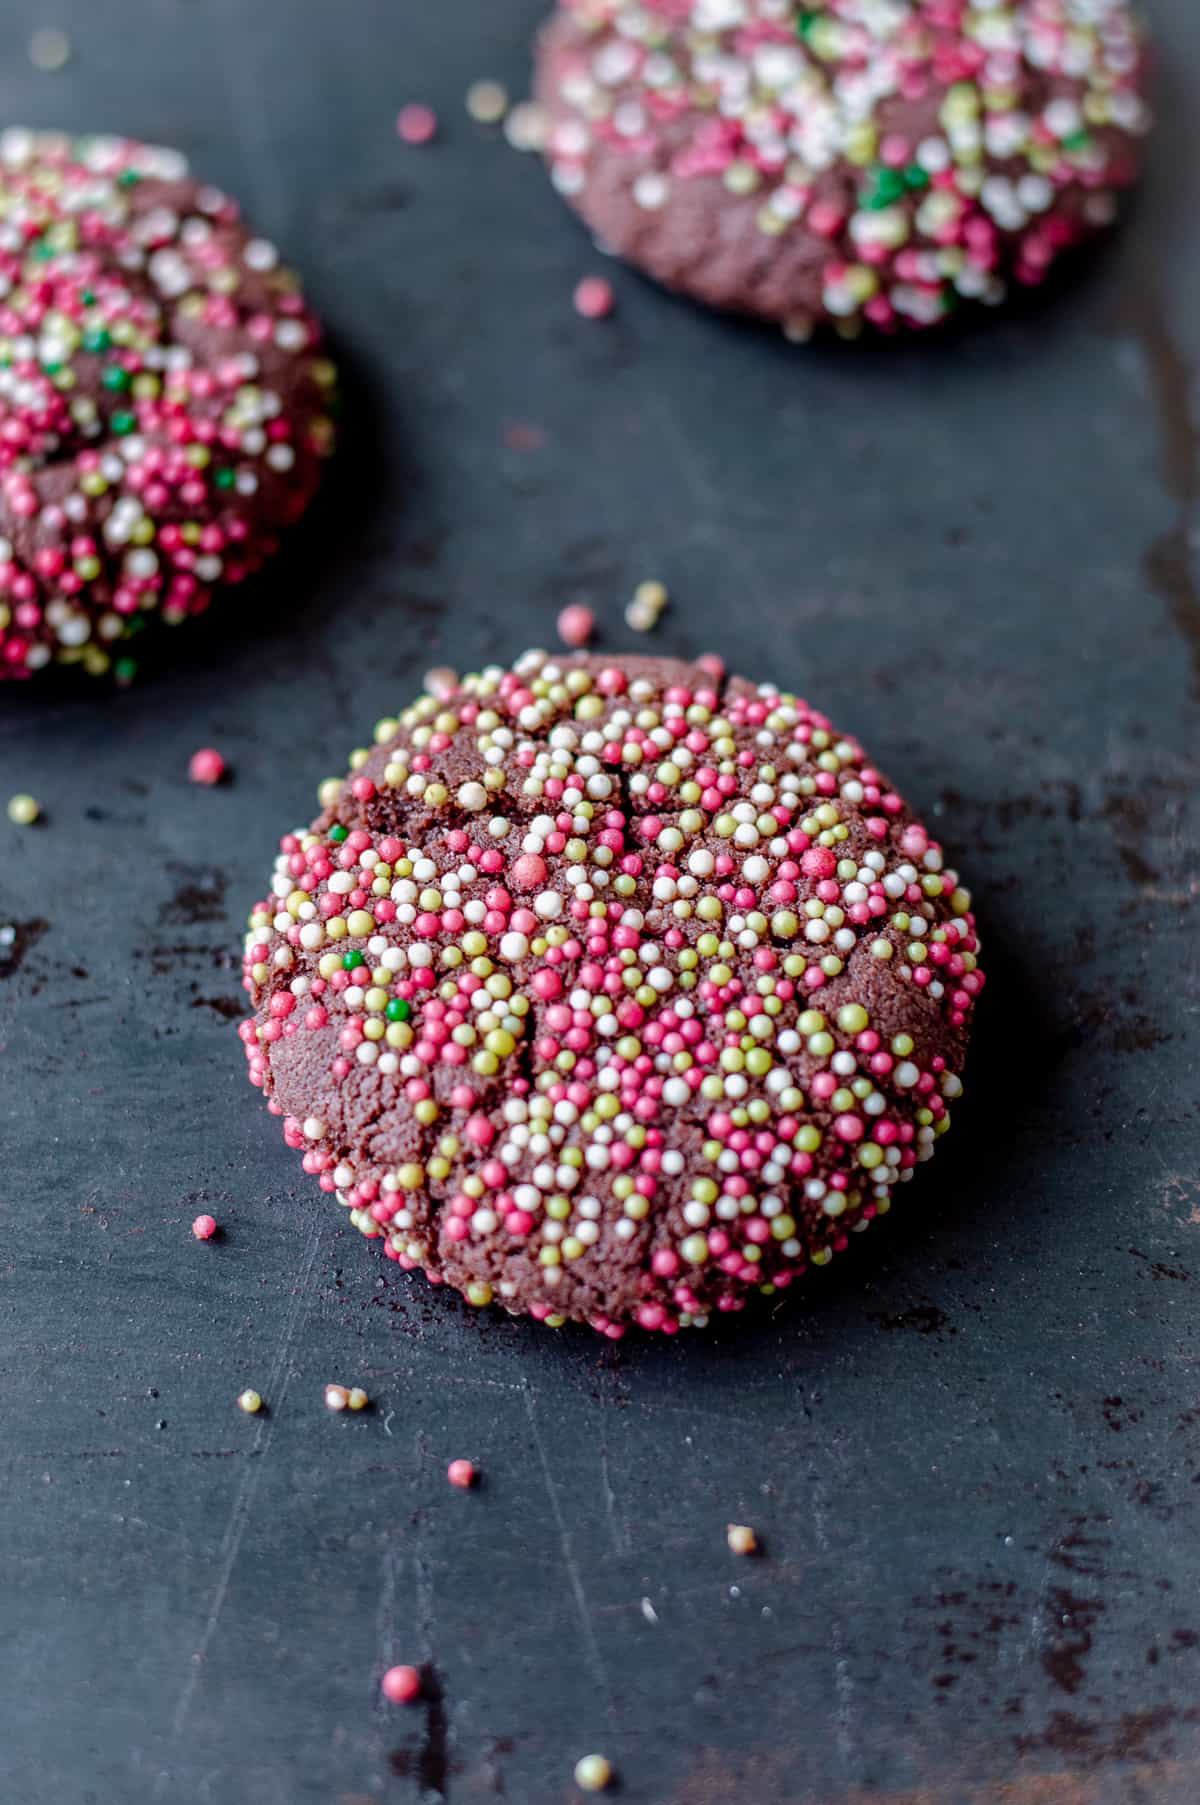 Chocolate cookie covered in sprinkles on dark grey baking tray